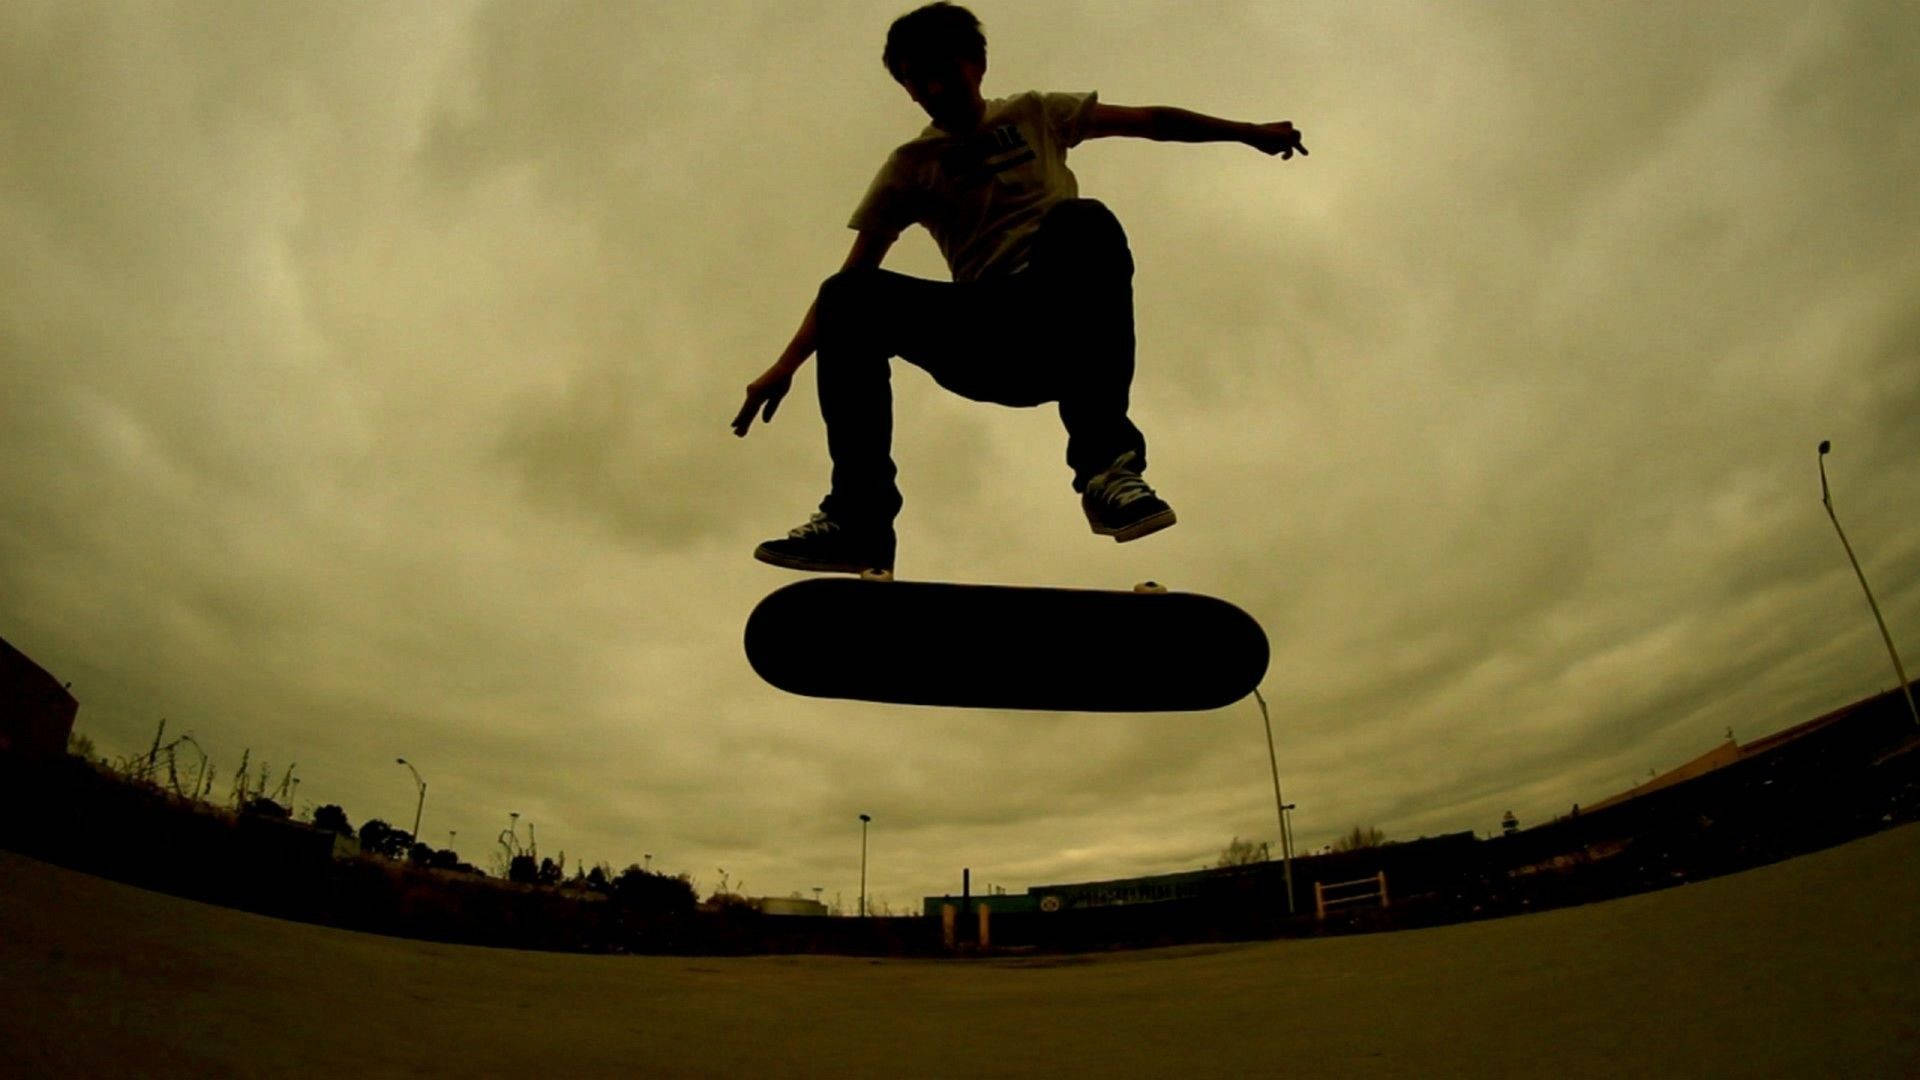 Skateboard Jump Silhouette Wide Angle